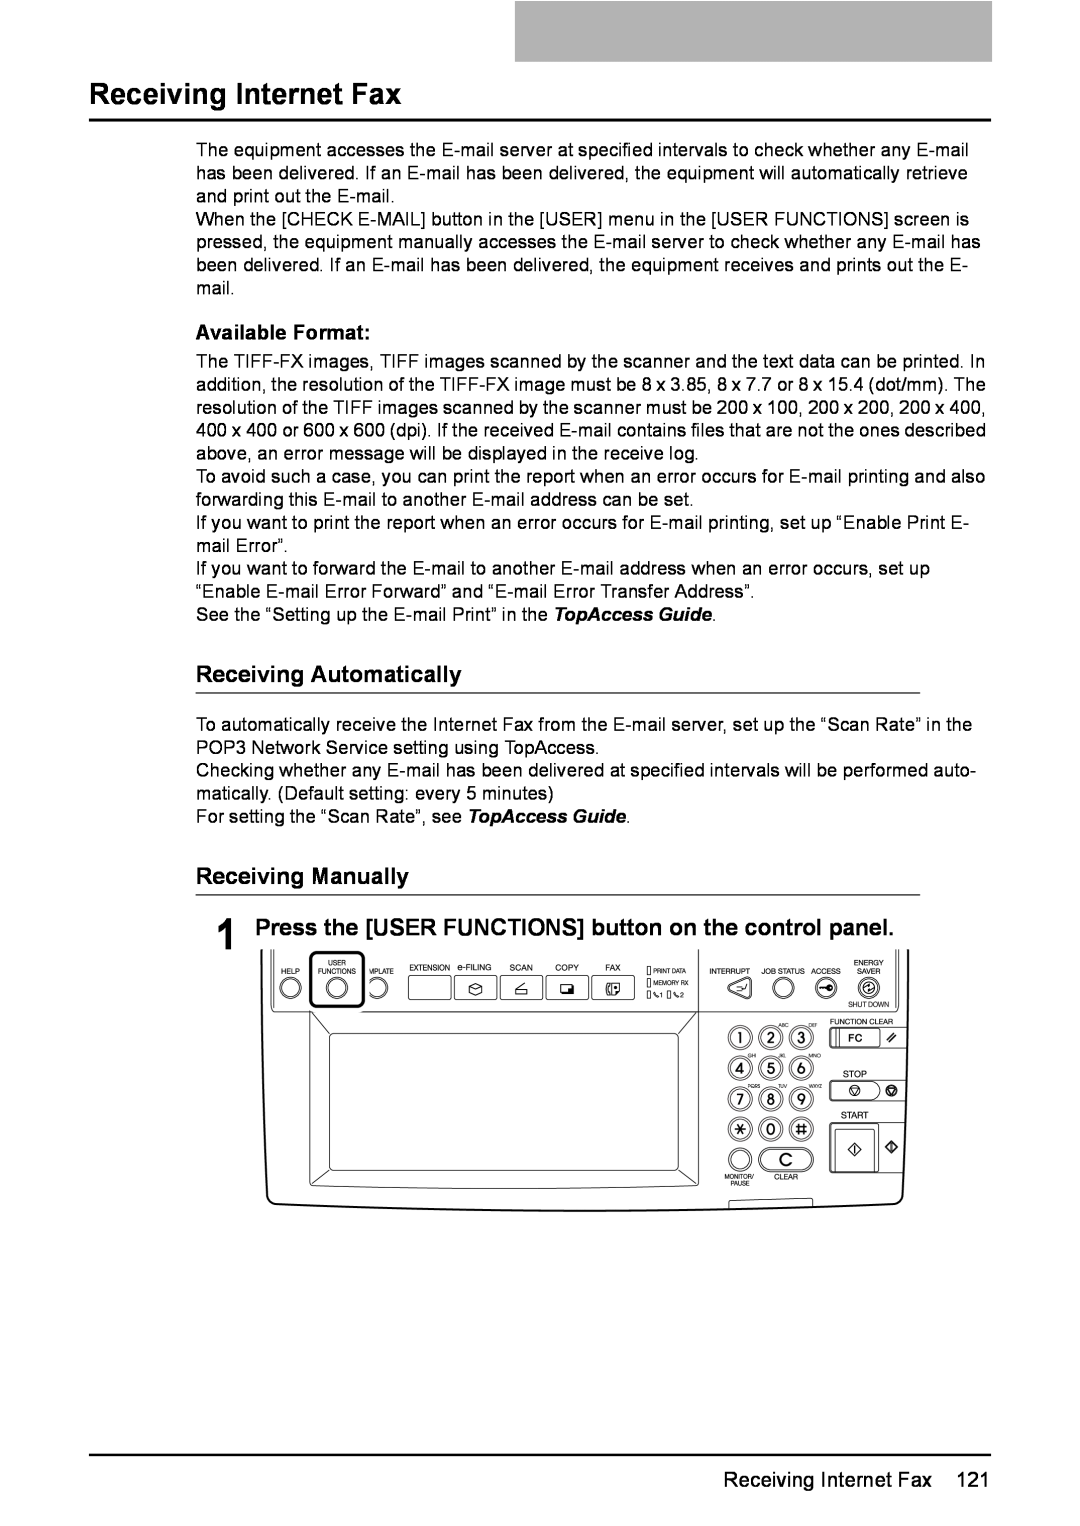 Toshiba 3500C, 2500C, 3510C manual Receiving Internet Fax, Receiving Automatically, Receiving Manually 